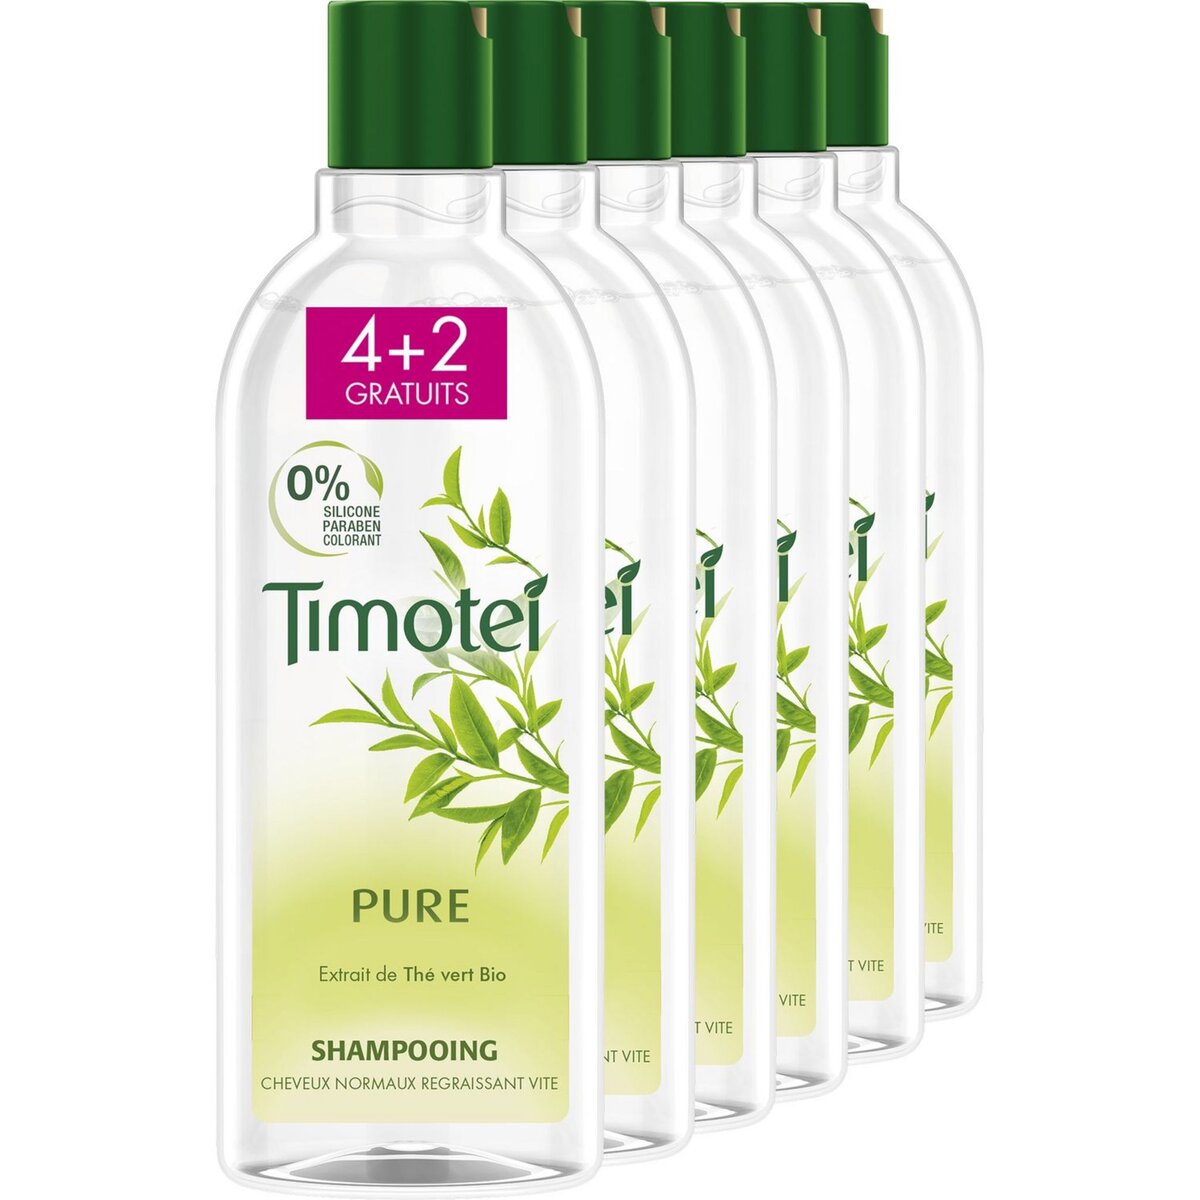 TIMOTEI Timotei shampooing pure 4x300ml +2offerts